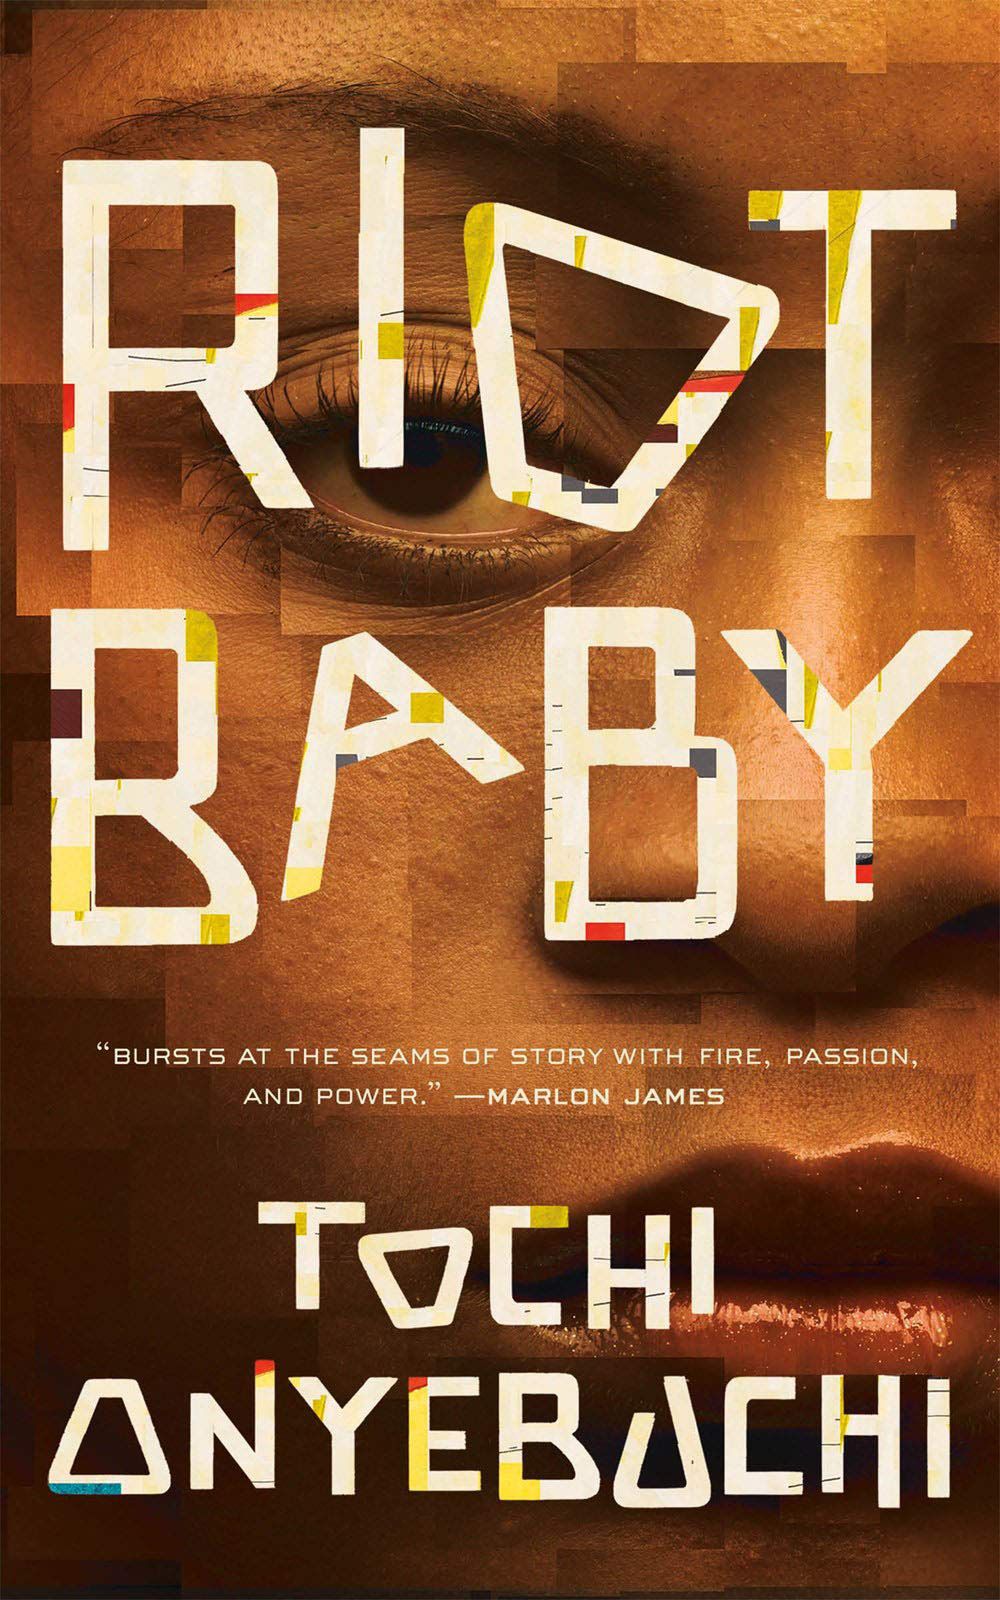  Tochi Onyebuchi’s dystopian book Riot Baby cover